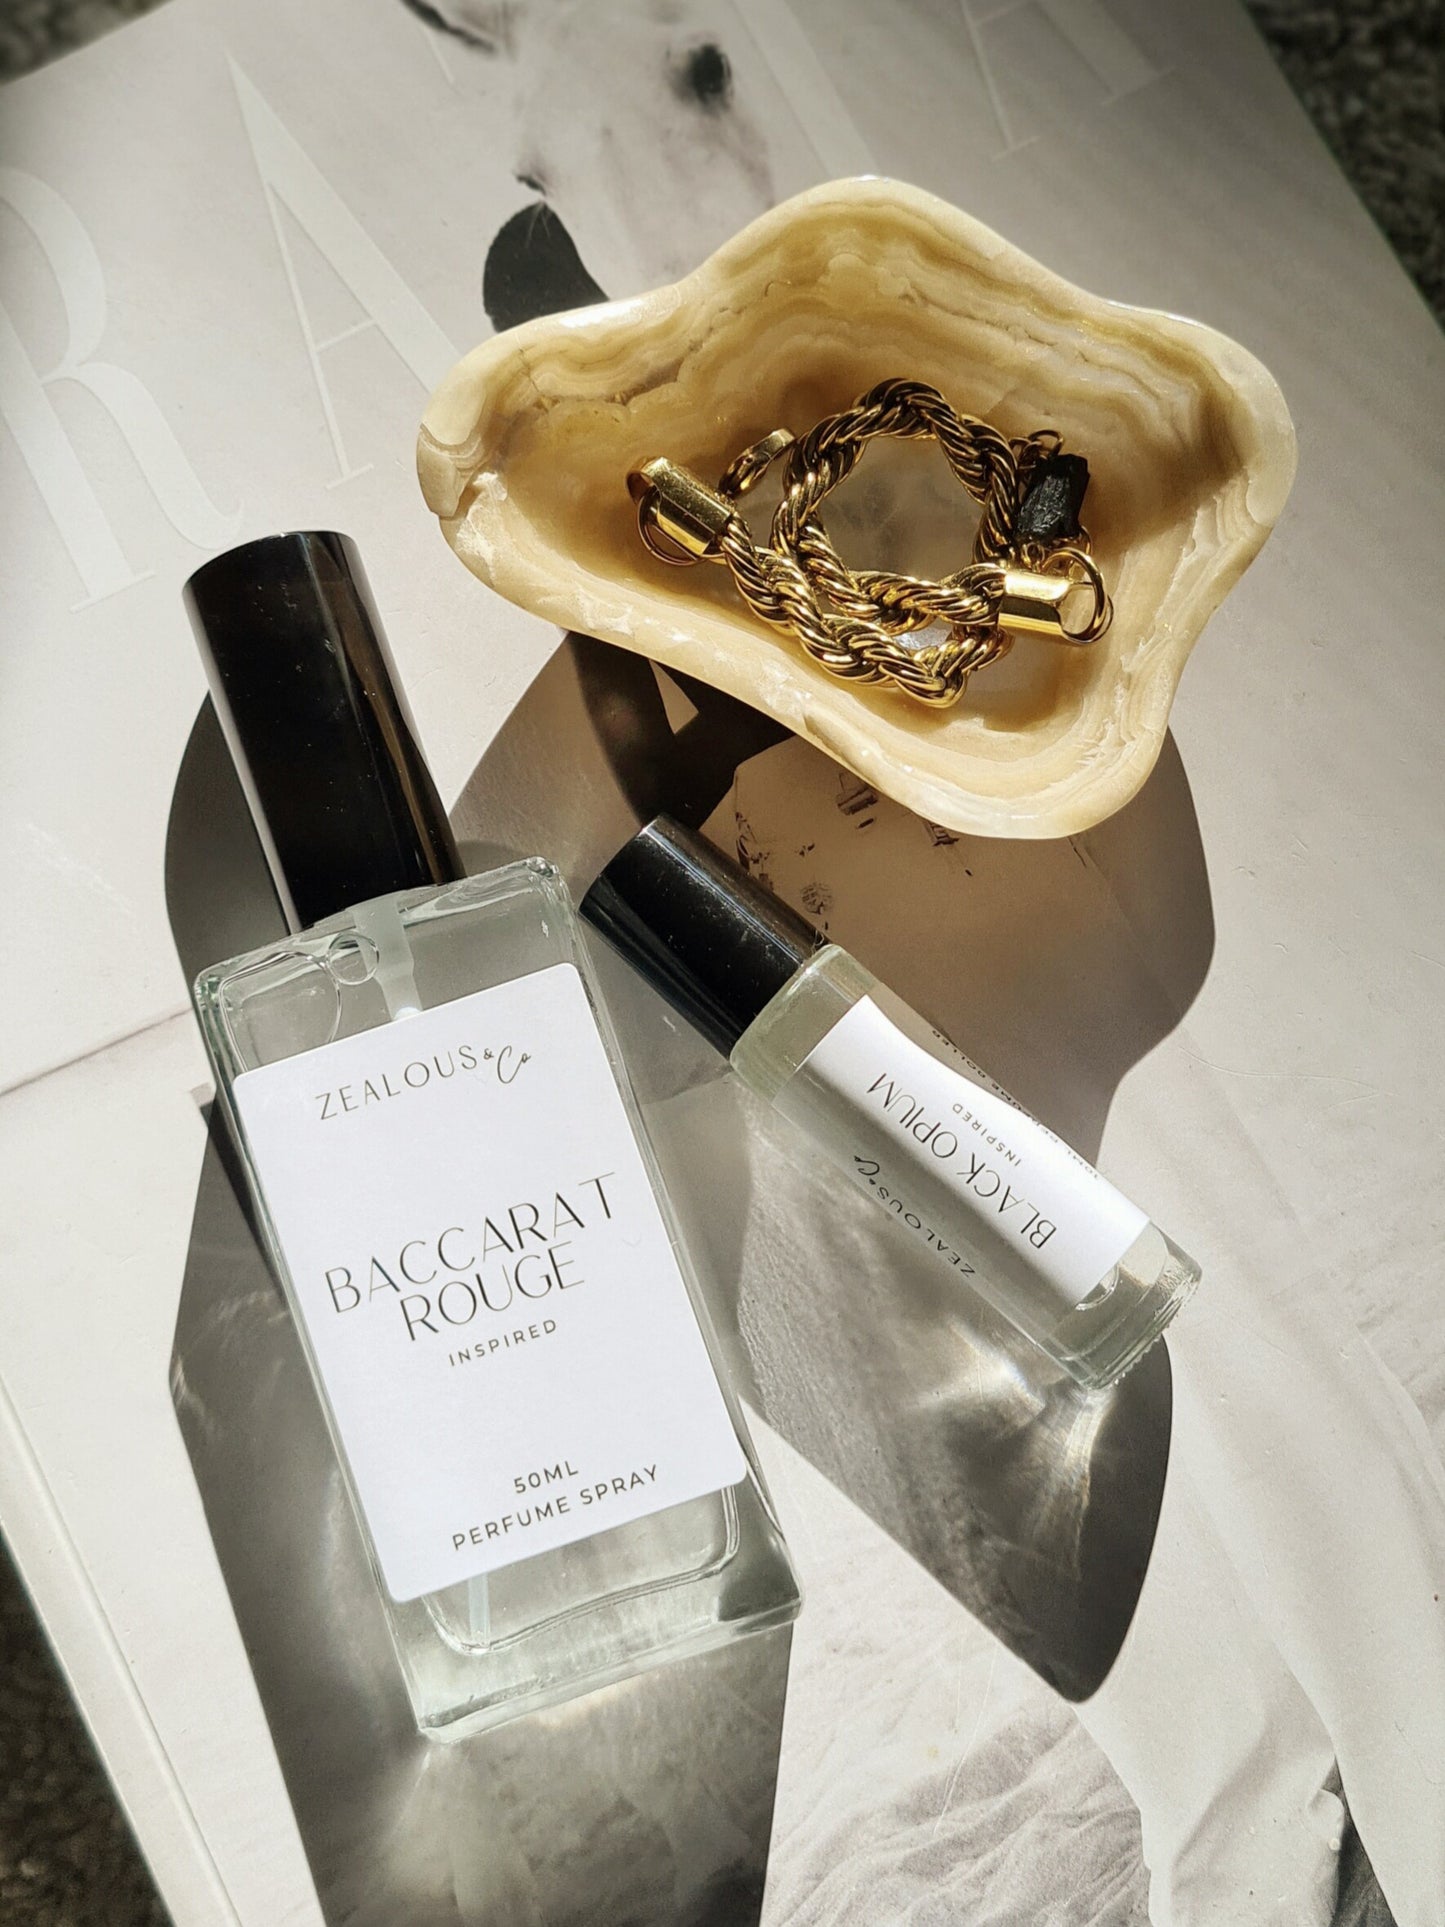 Cheirosa 62 Inspired Perfume 50ml